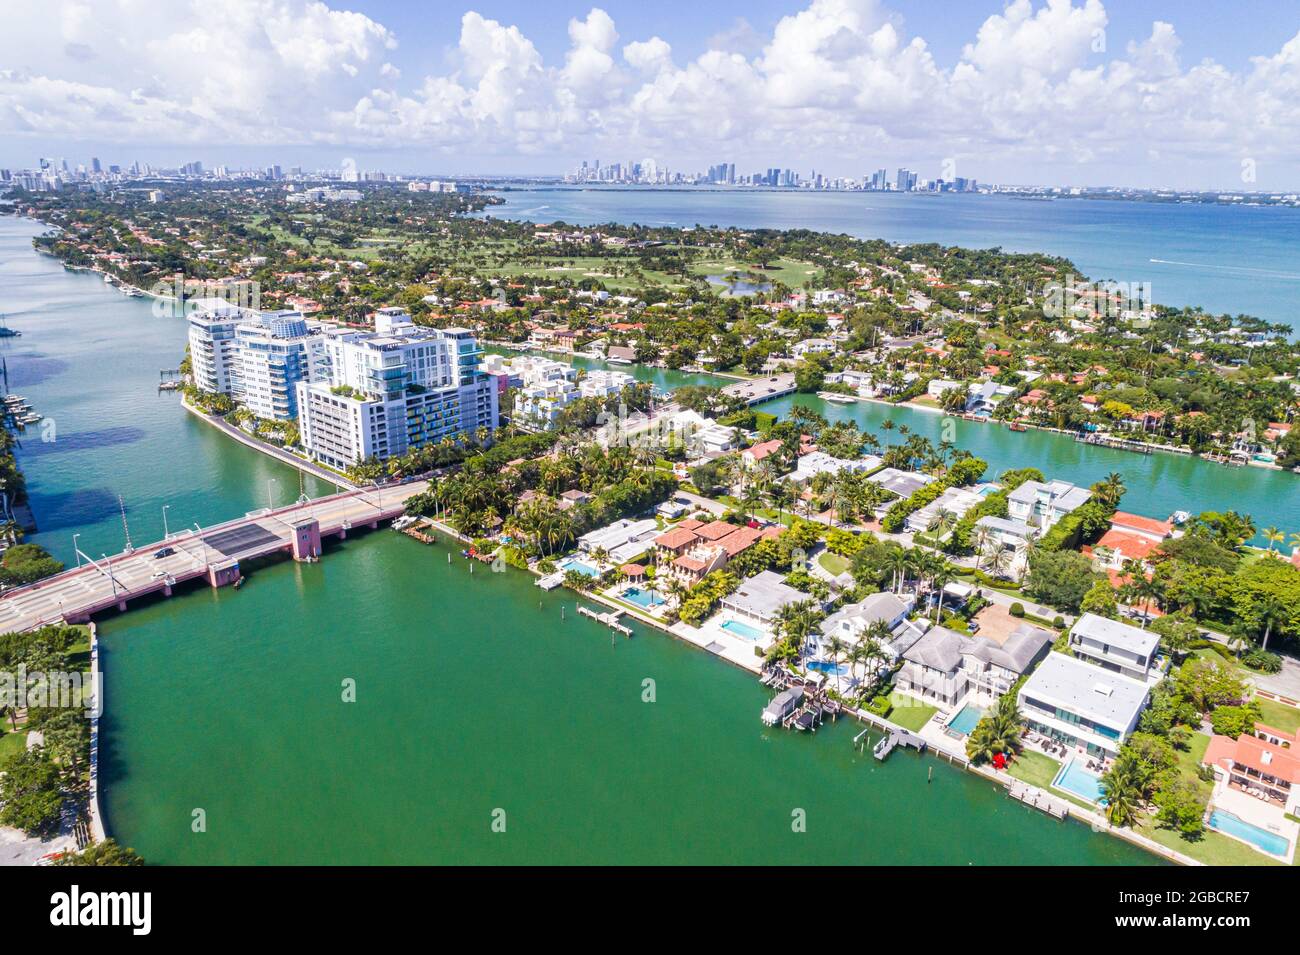 Miami Beach Florida,La Gorce Island Allison Island,Biscayne Bay waterfront homes residences,Indian Creek water 63rd Street,city skyline aerial overhea Stock Photo